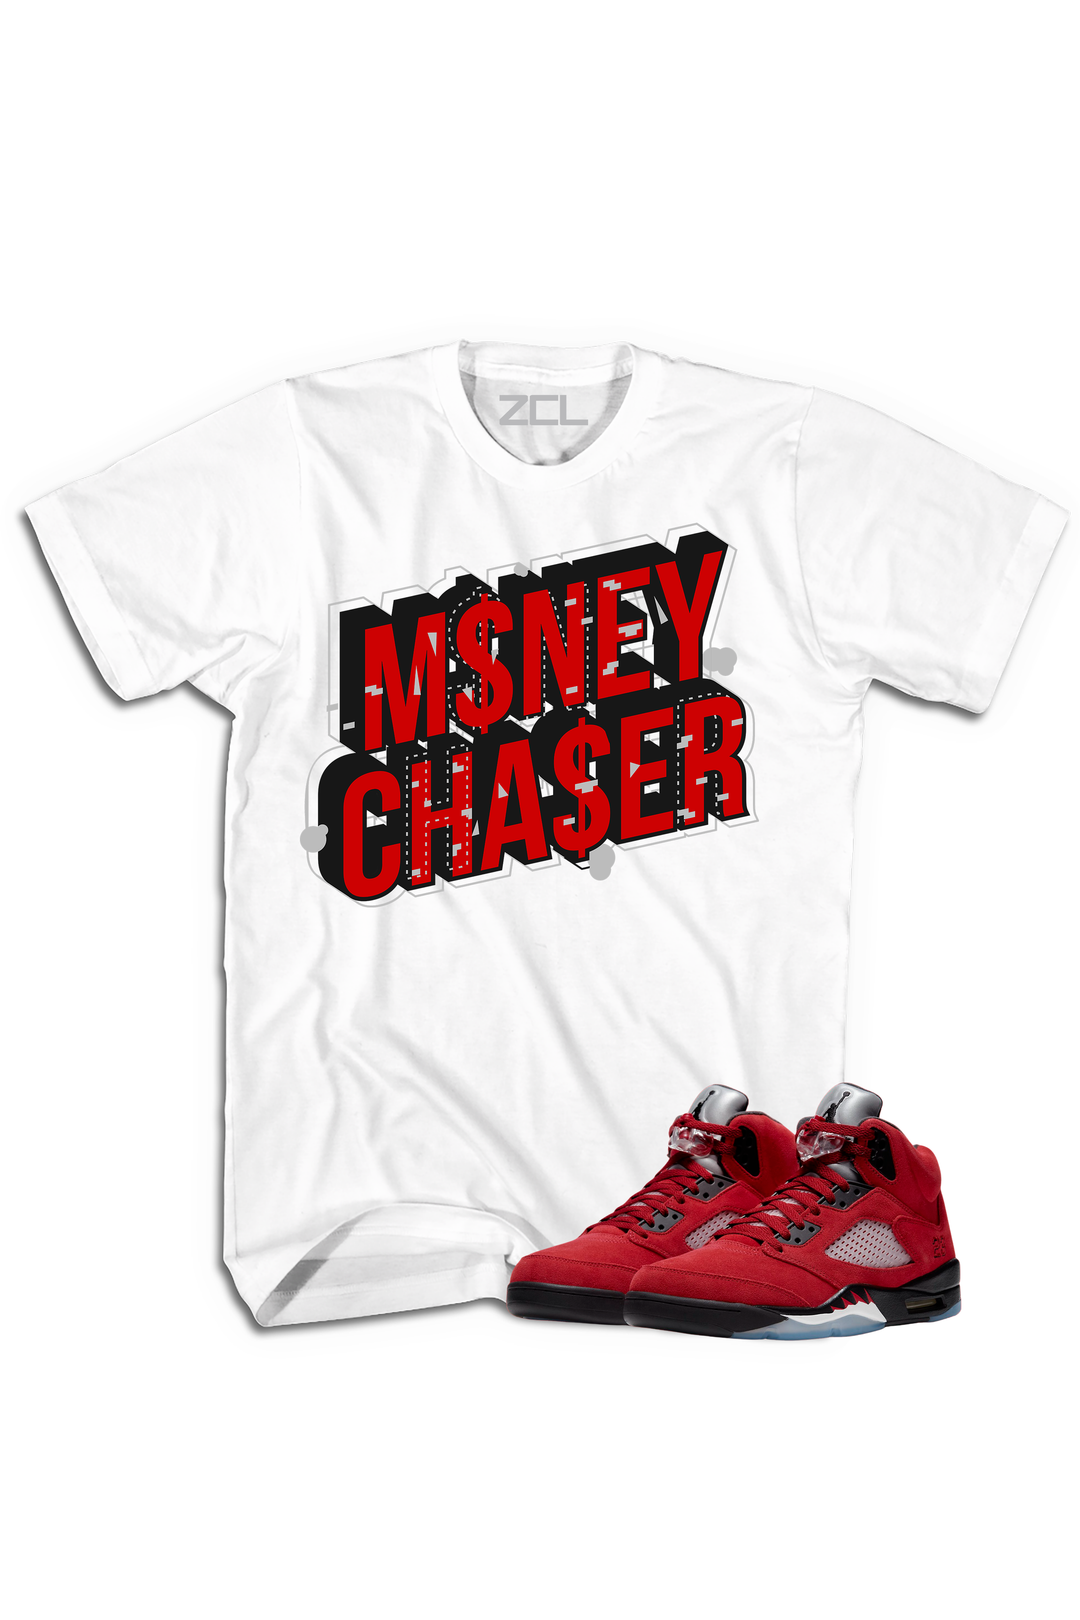 Air Jordan 5 Retro "Money Chaser" Tee Raging Bull - Zamage